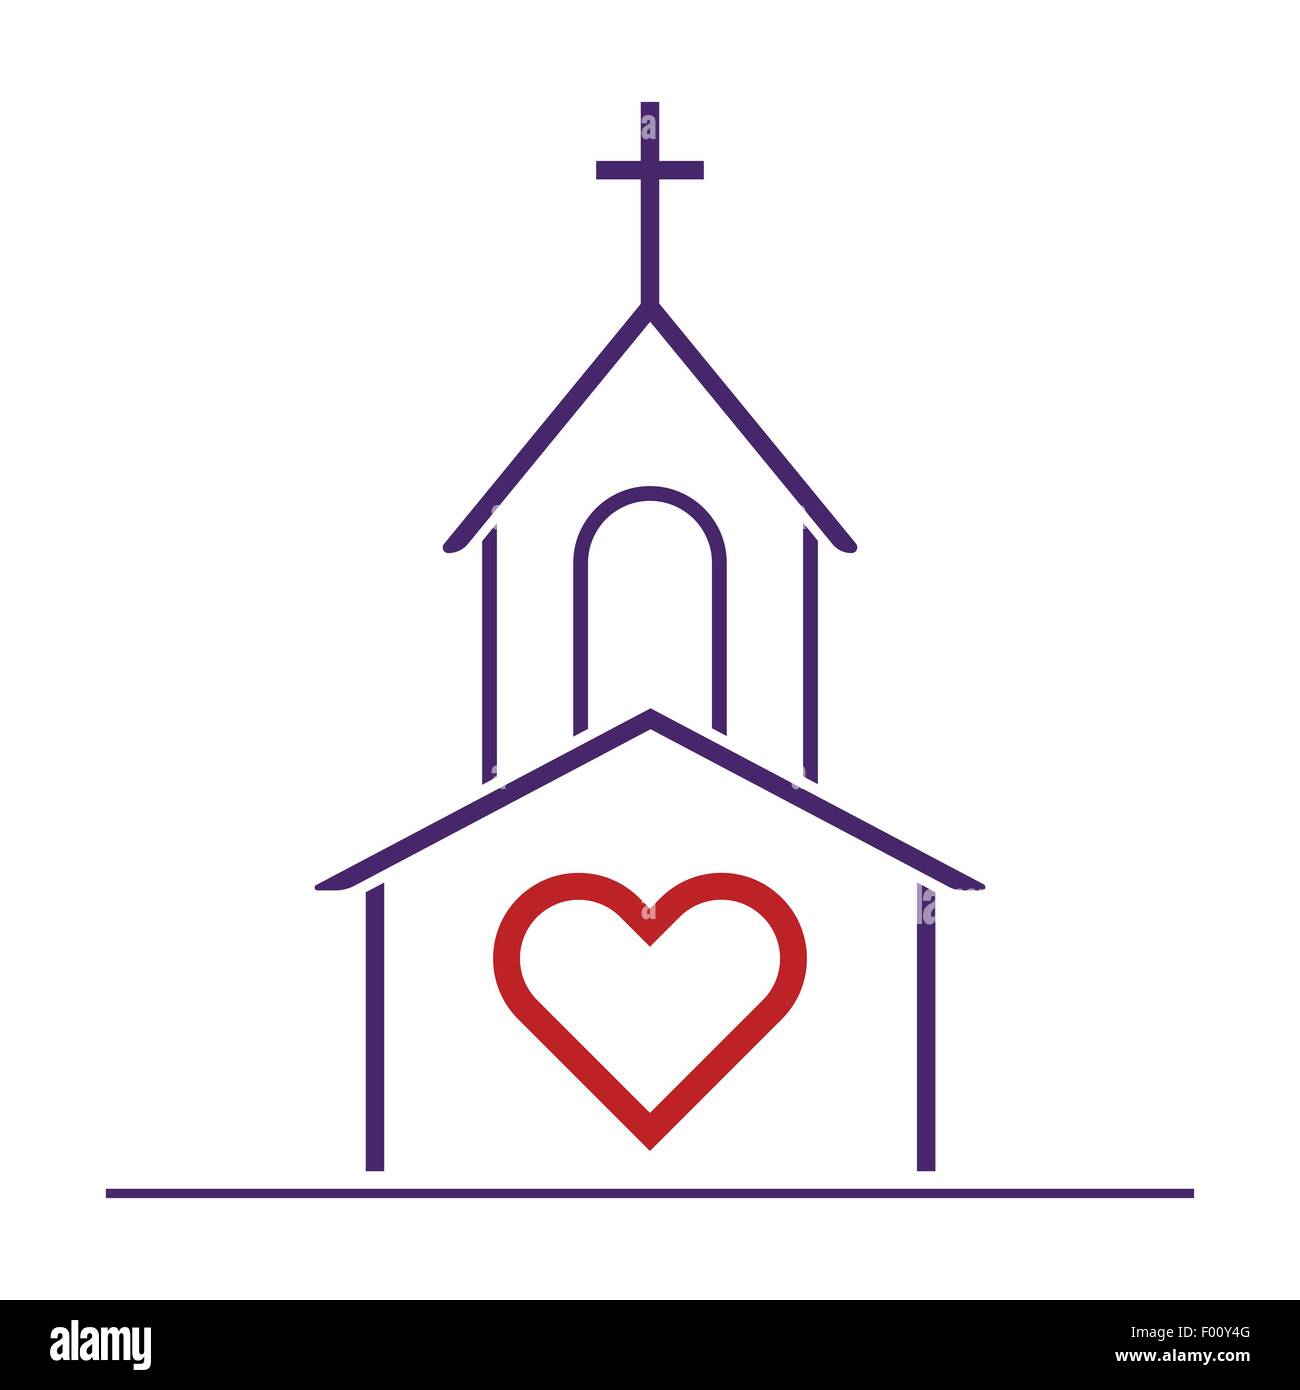 Iglesia cristiana Imágenes vectoriales de stock - Alamy